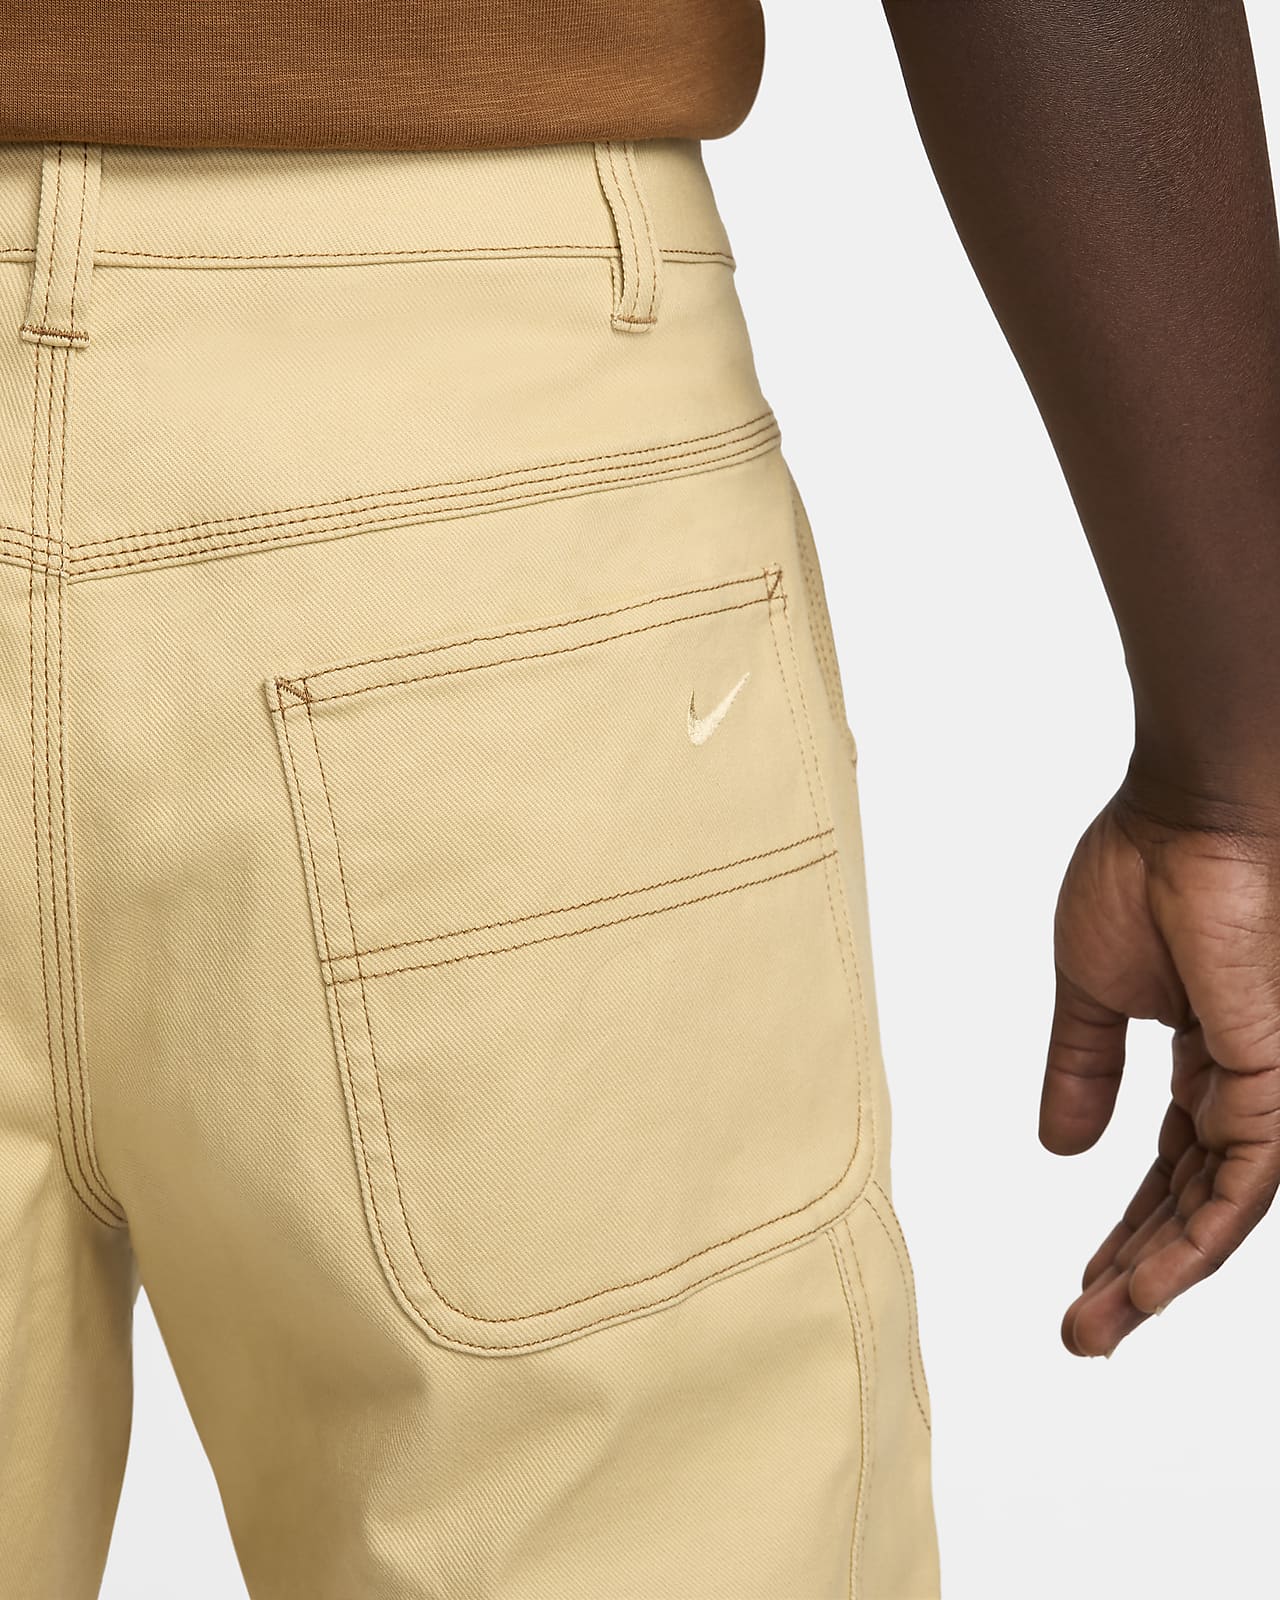 Nike Life Carpenter pants in beige